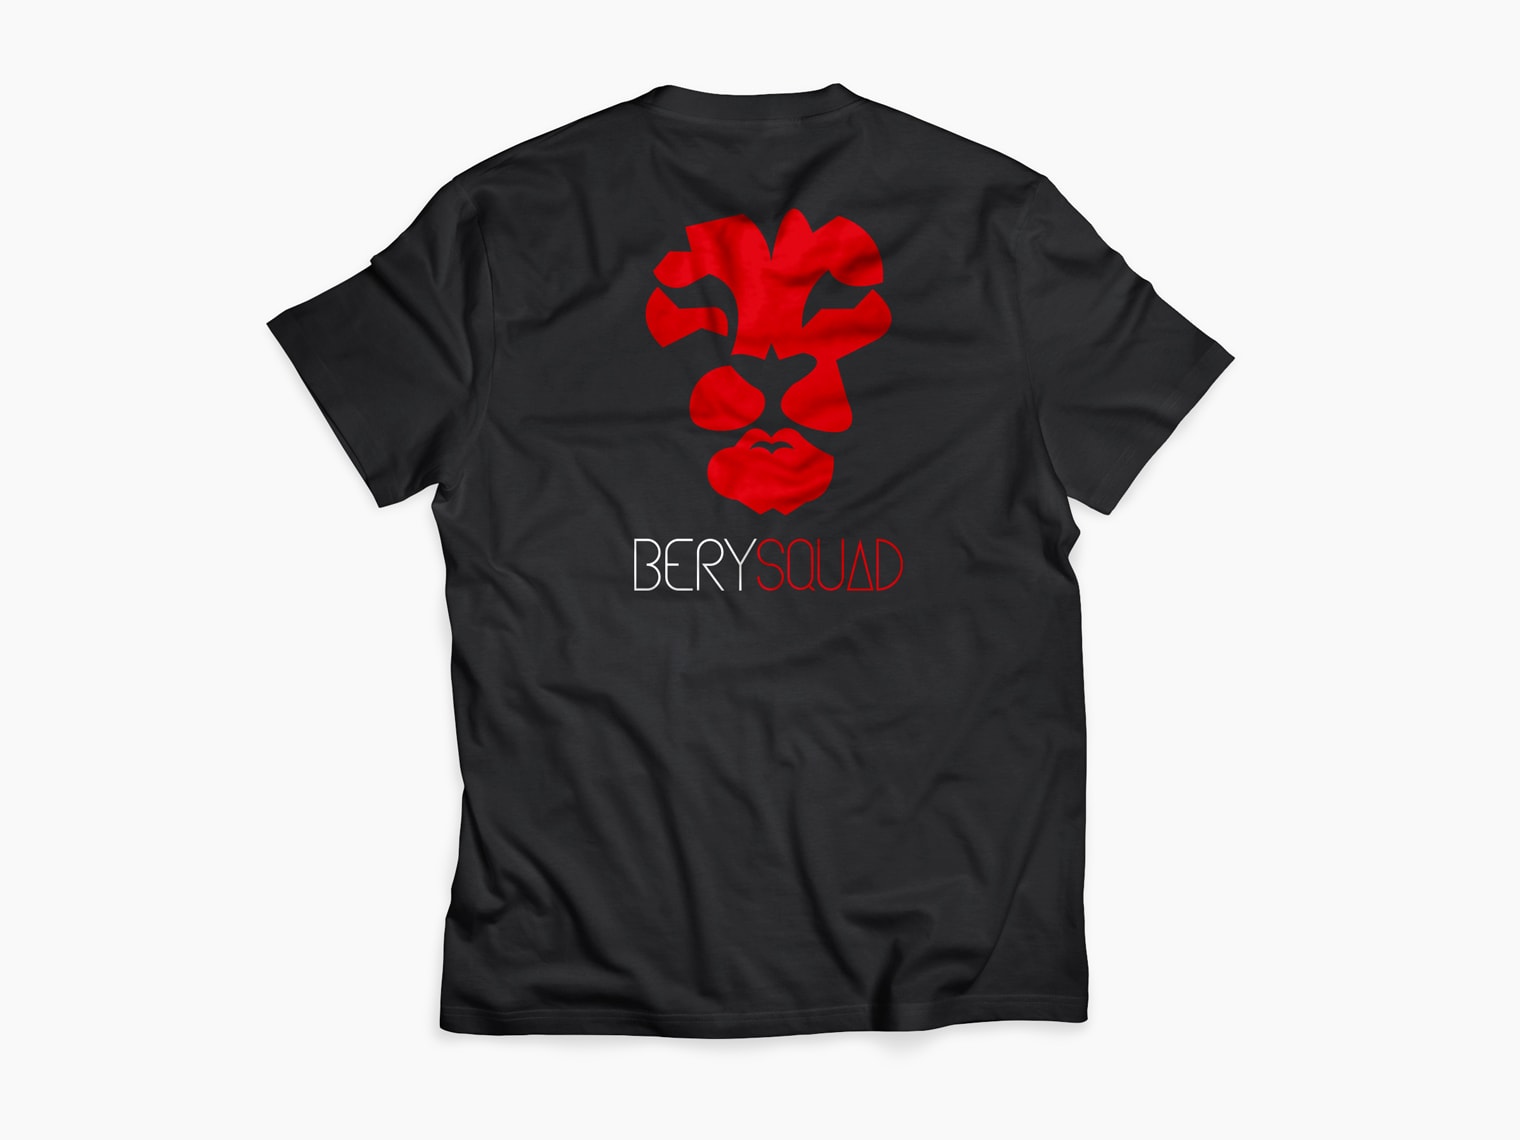 Logo sur t-shirt Berysquad